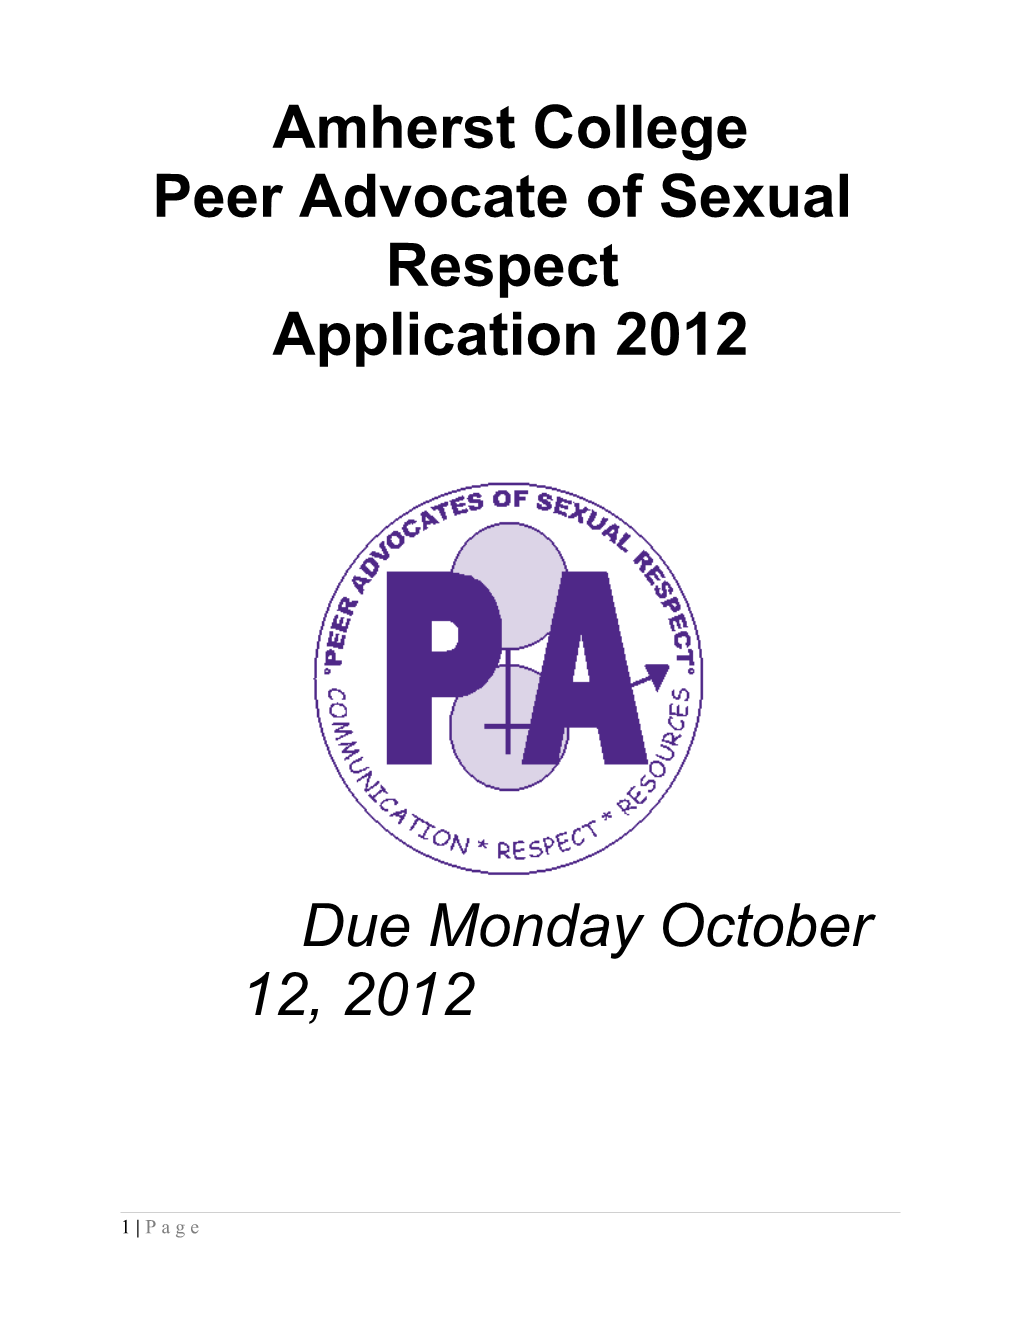 Amherst College Peer Advocate Program Application 2004